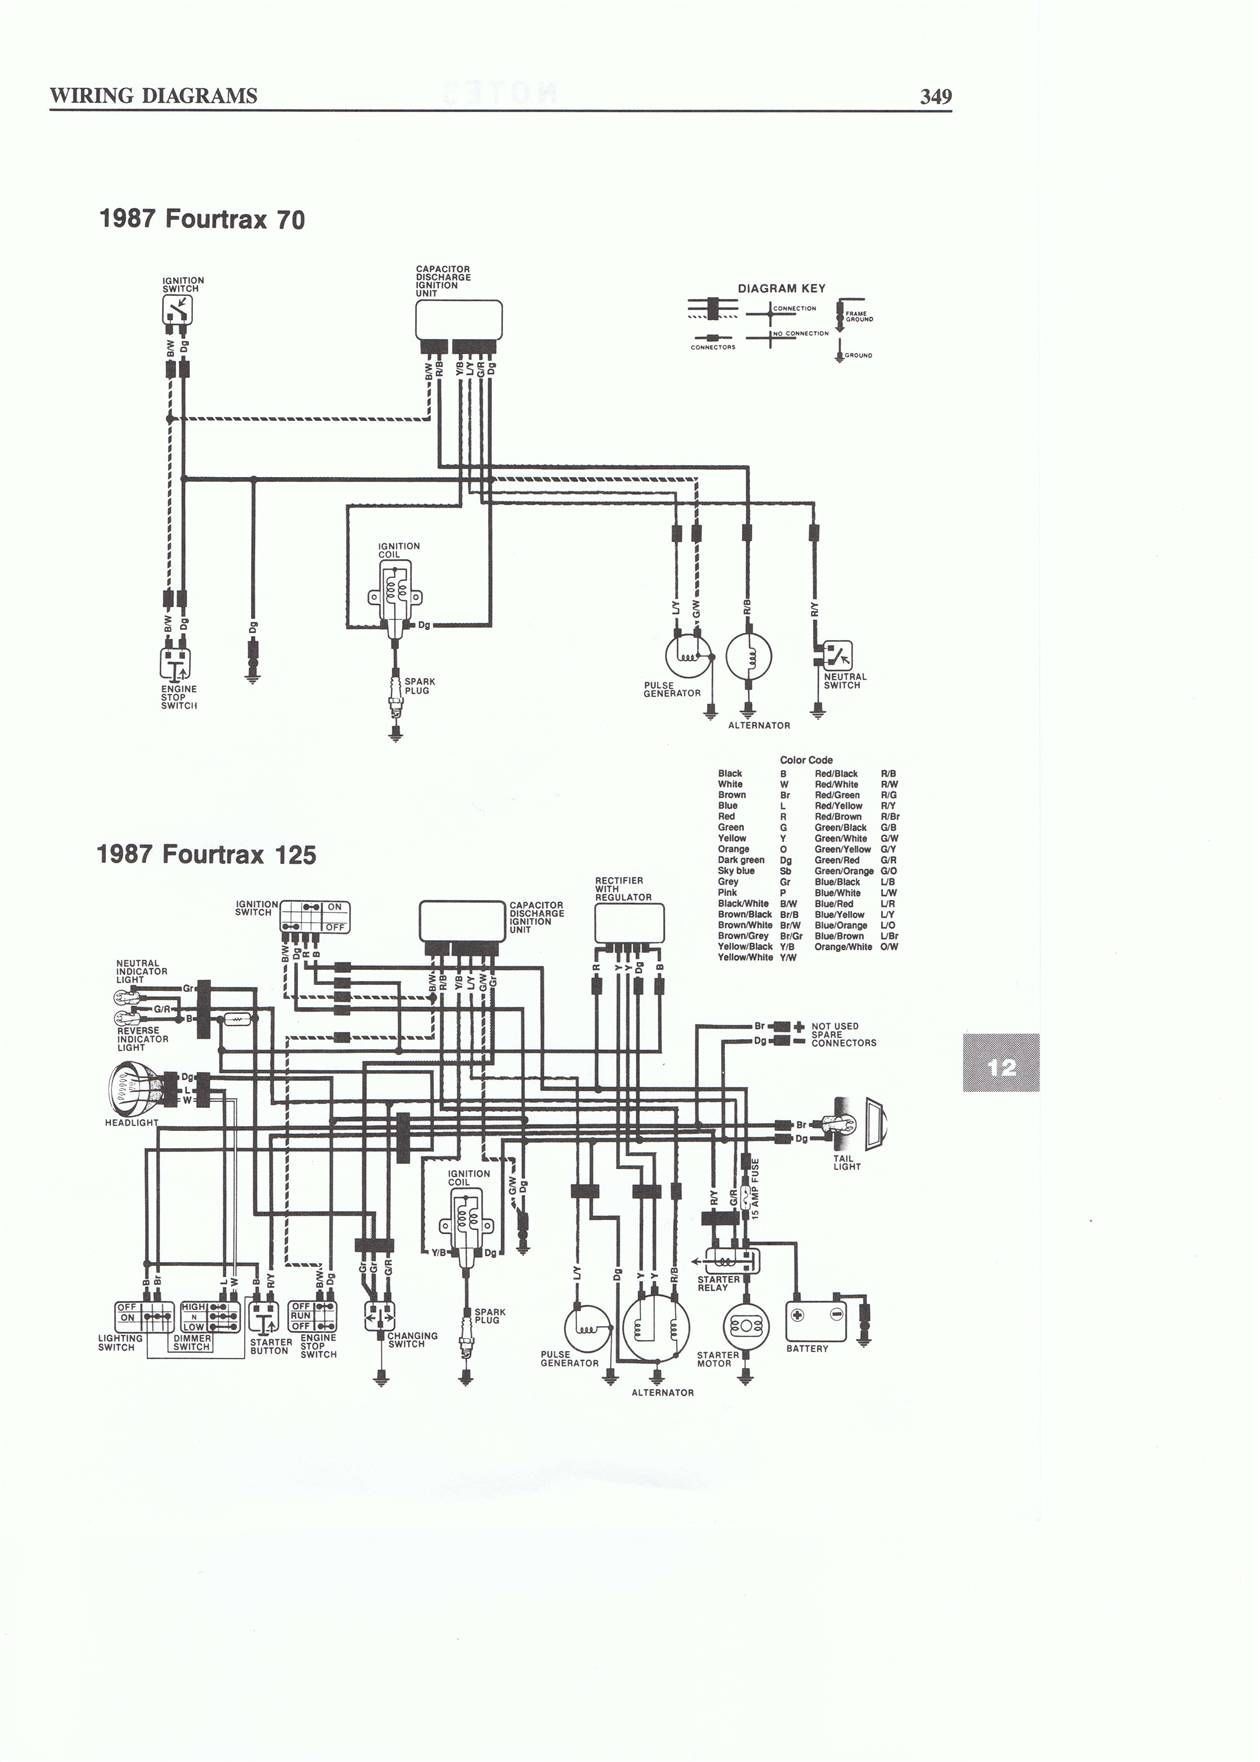 Direct online dol Starter Wiring Diagram Save Gy6 Engine Wiring Diagram Diy and